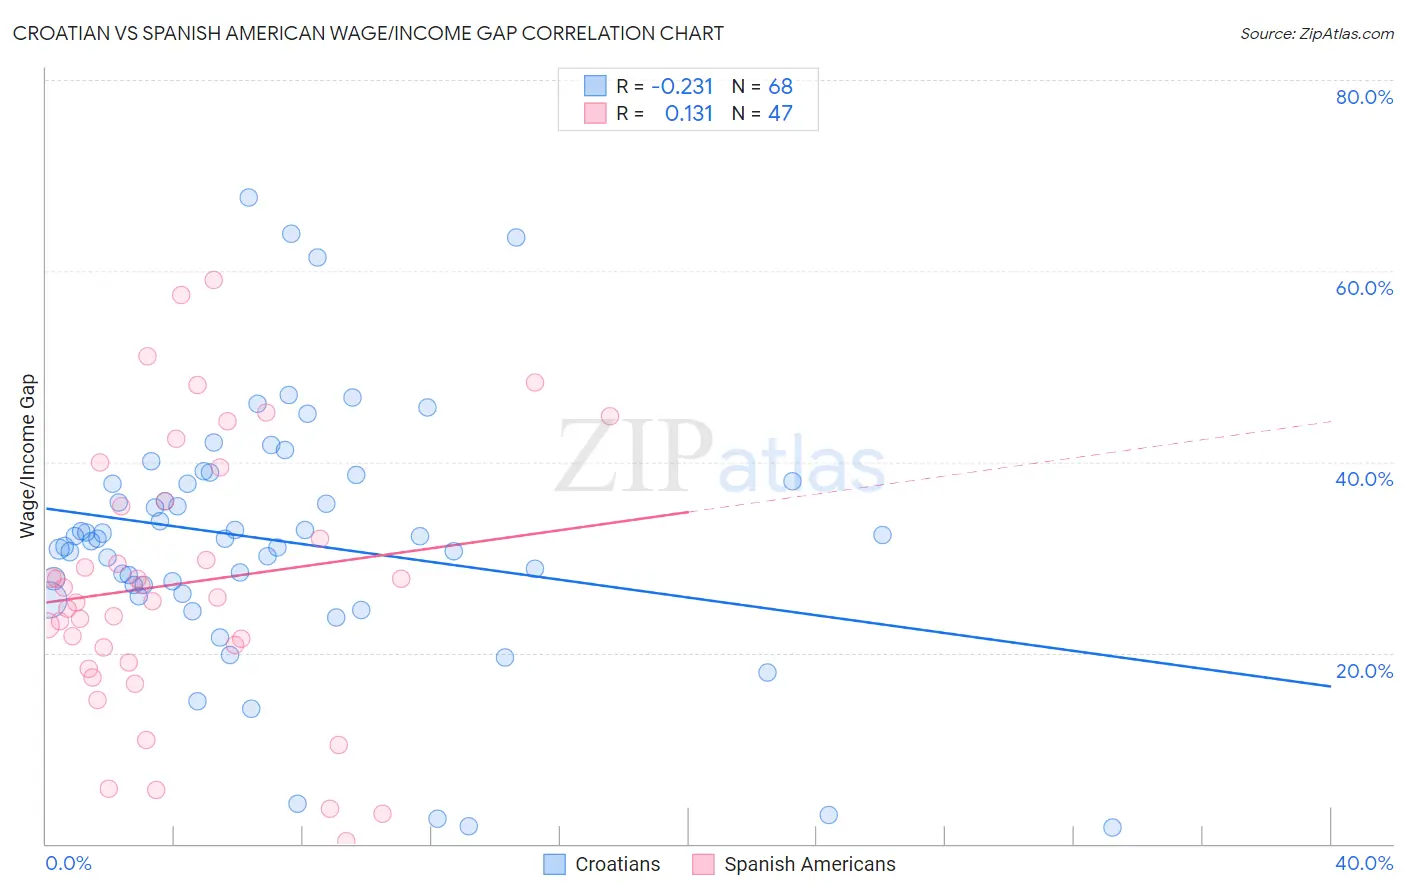 Croatian vs Spanish American Wage/Income Gap